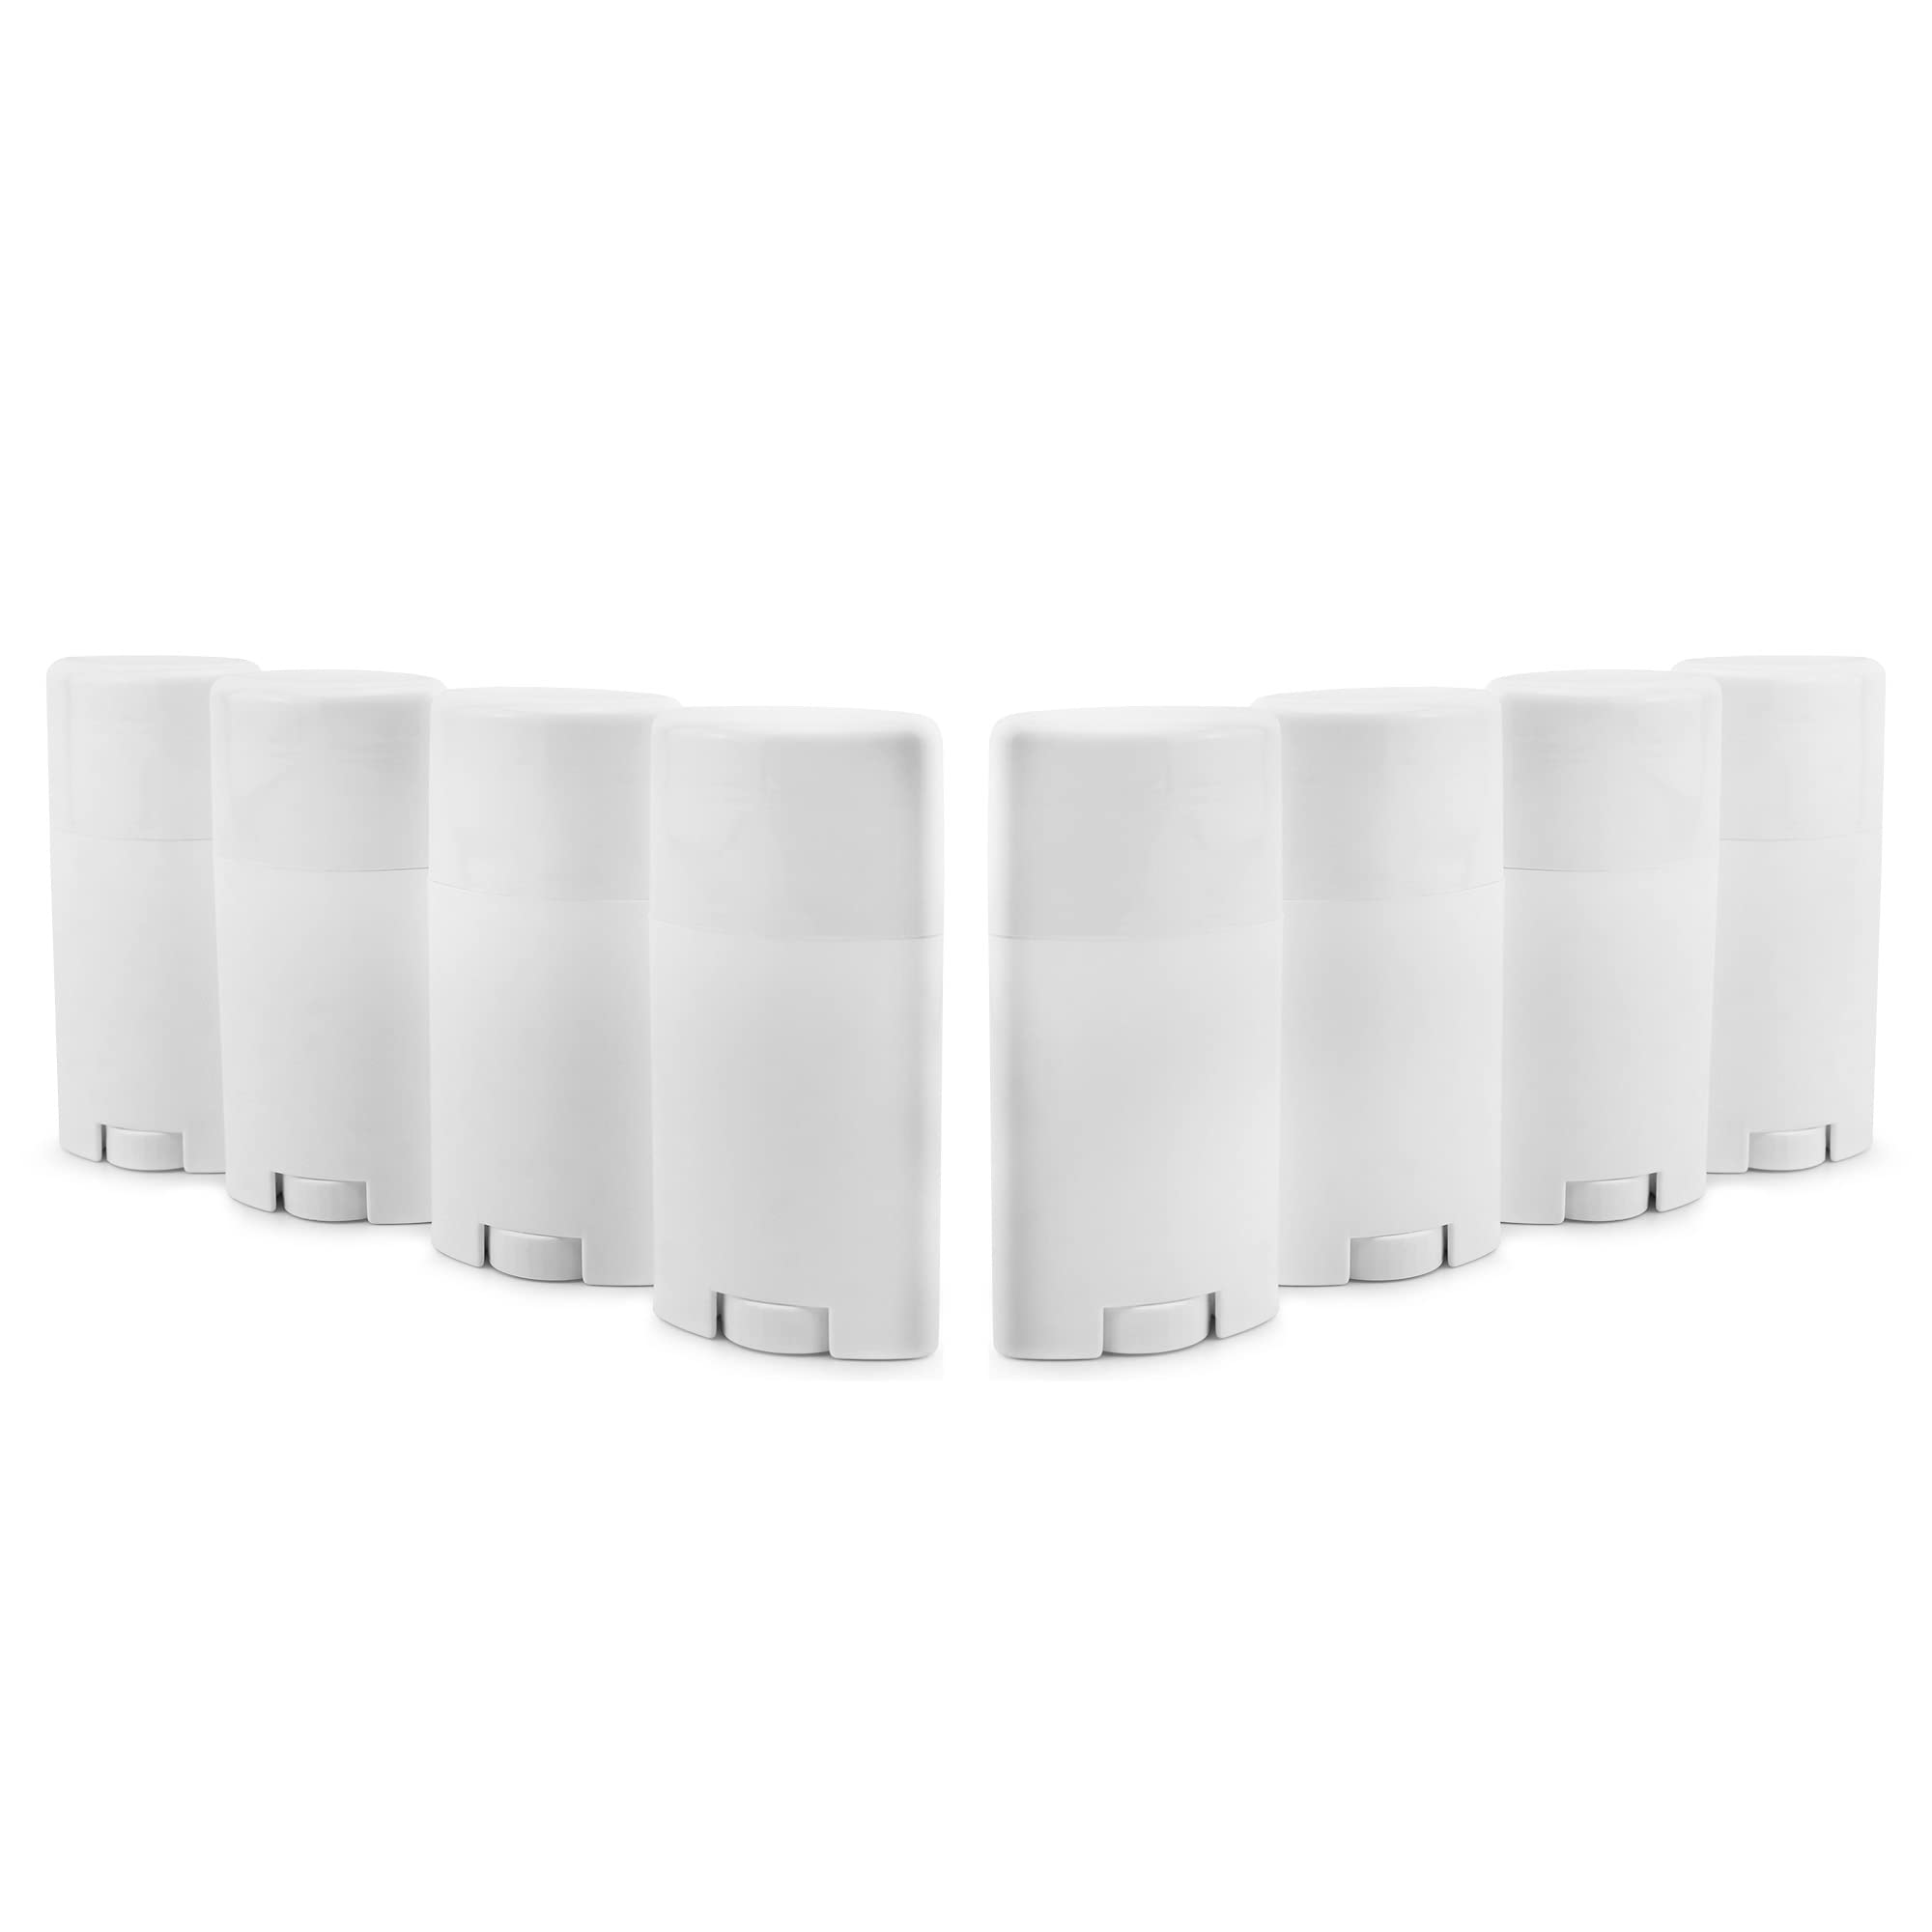 Book Cover Cornucopia 2.5oz Empty Deodorant Containers (8-Pack, 75ml); BPA-Free Plastic White Twist-Up Refillable Tubes for DIY Deodorant, Aromatherapy, Balm, Etc.